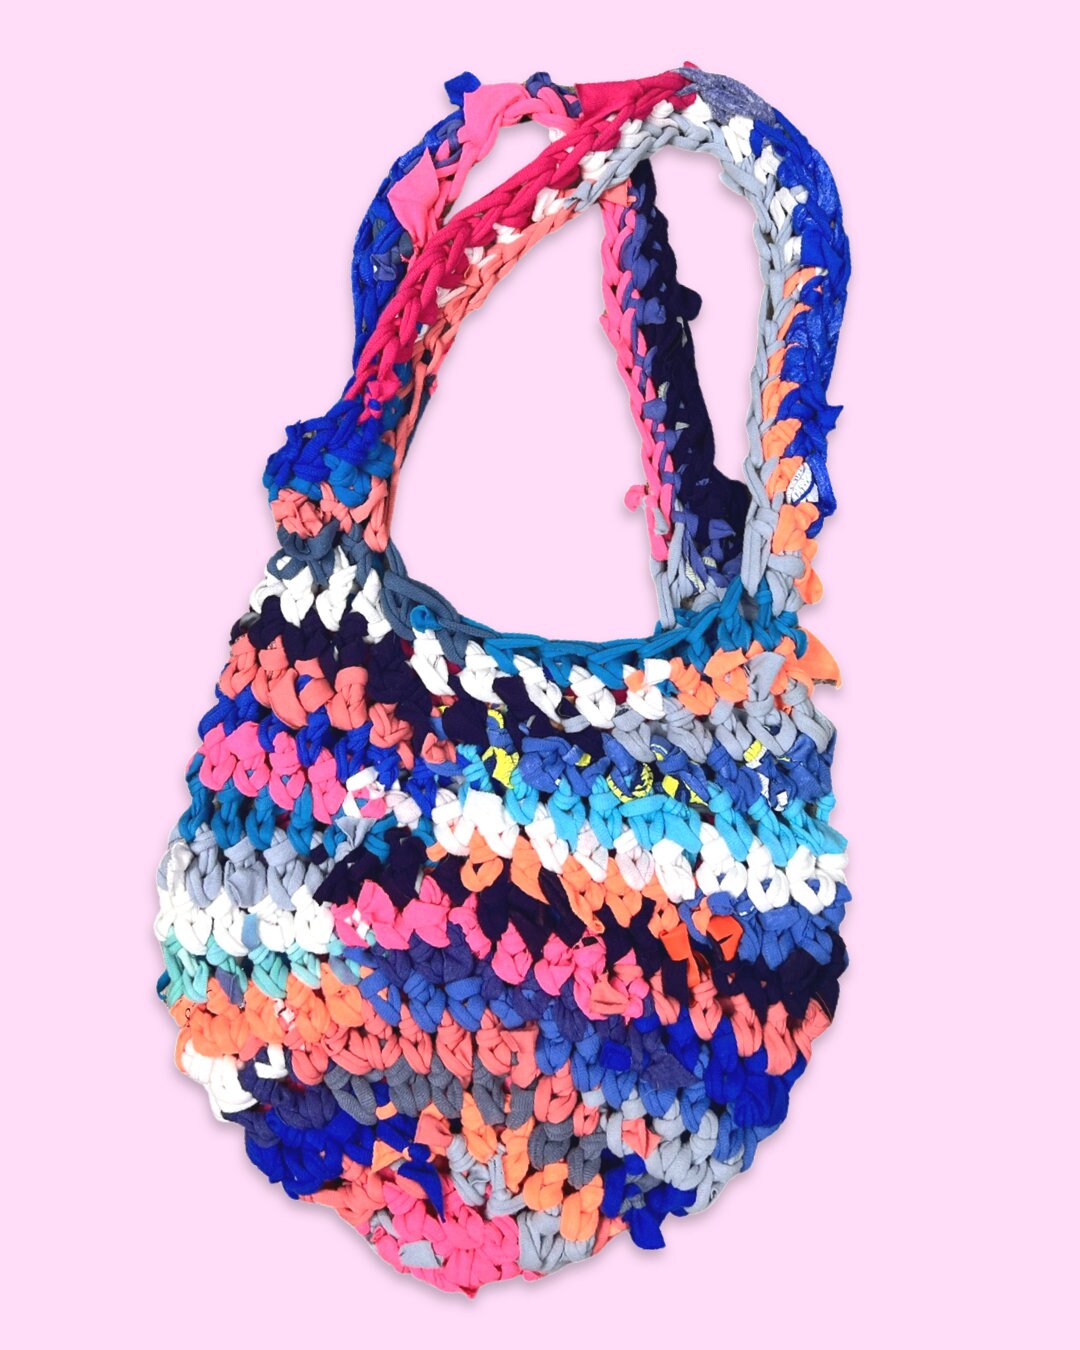 Pink/Blue Crocheted T-shirt Yarn Bag